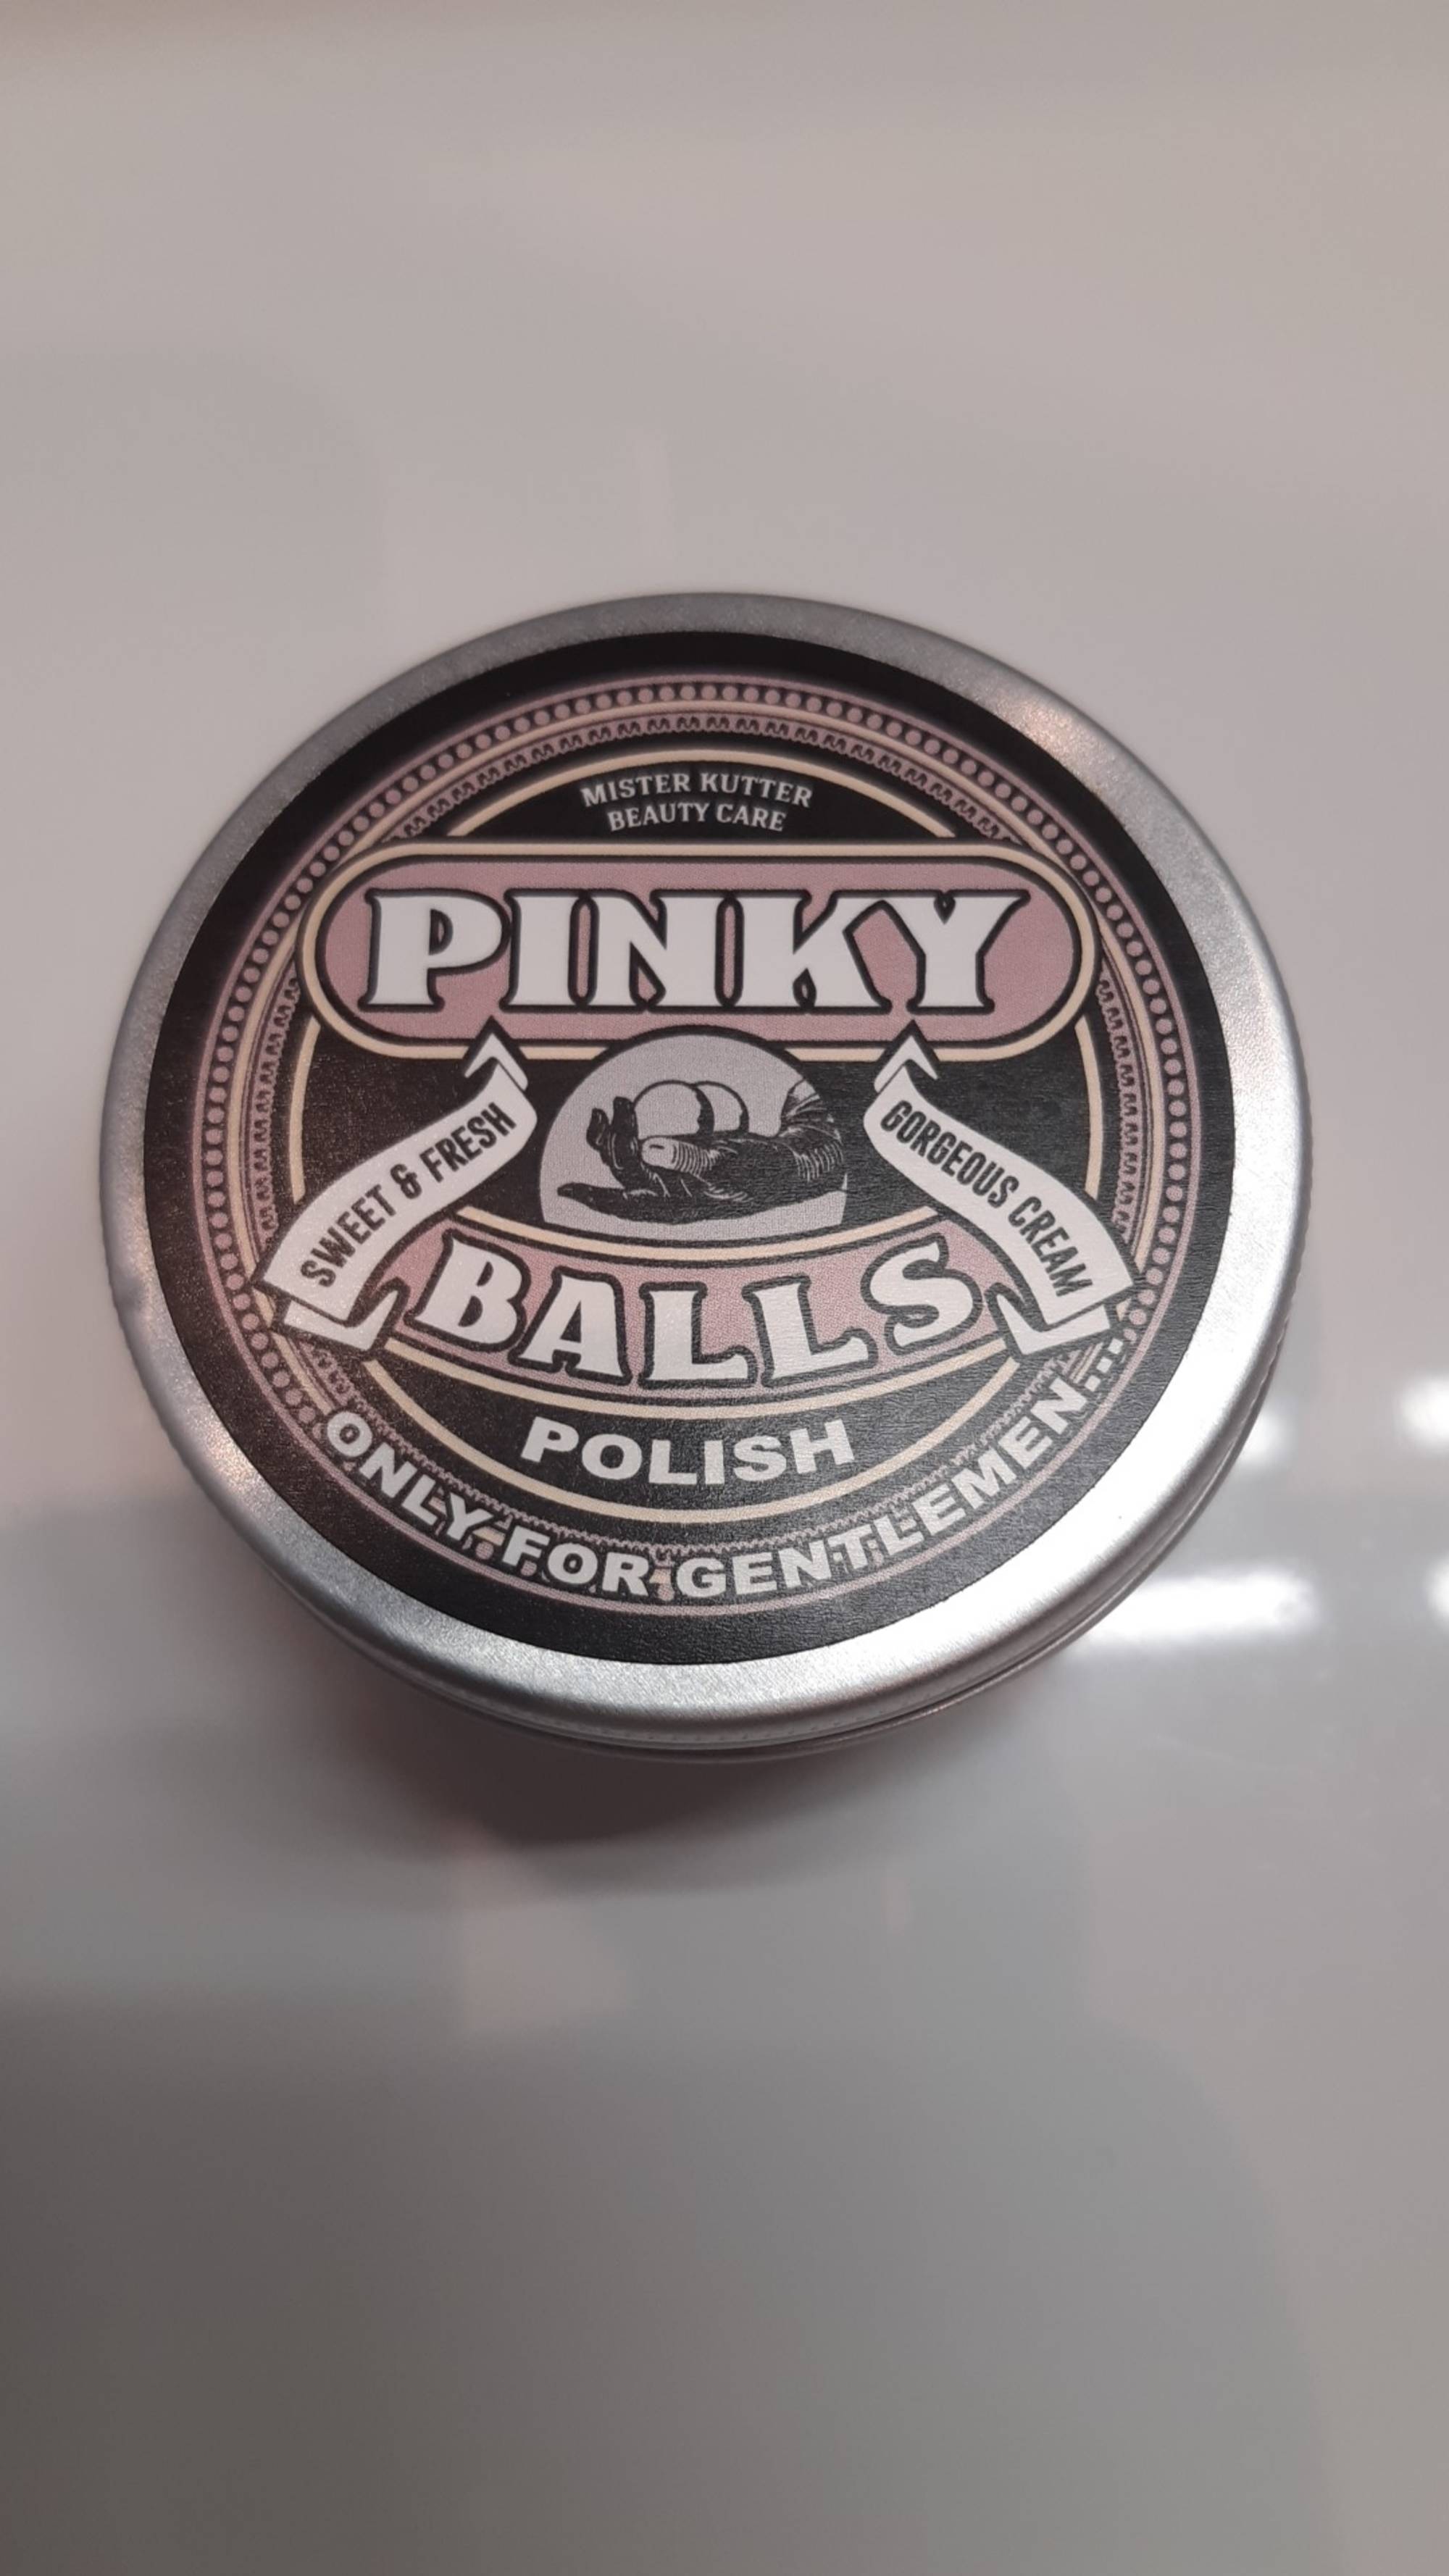 PINKY - Balls polish only for gentlemen